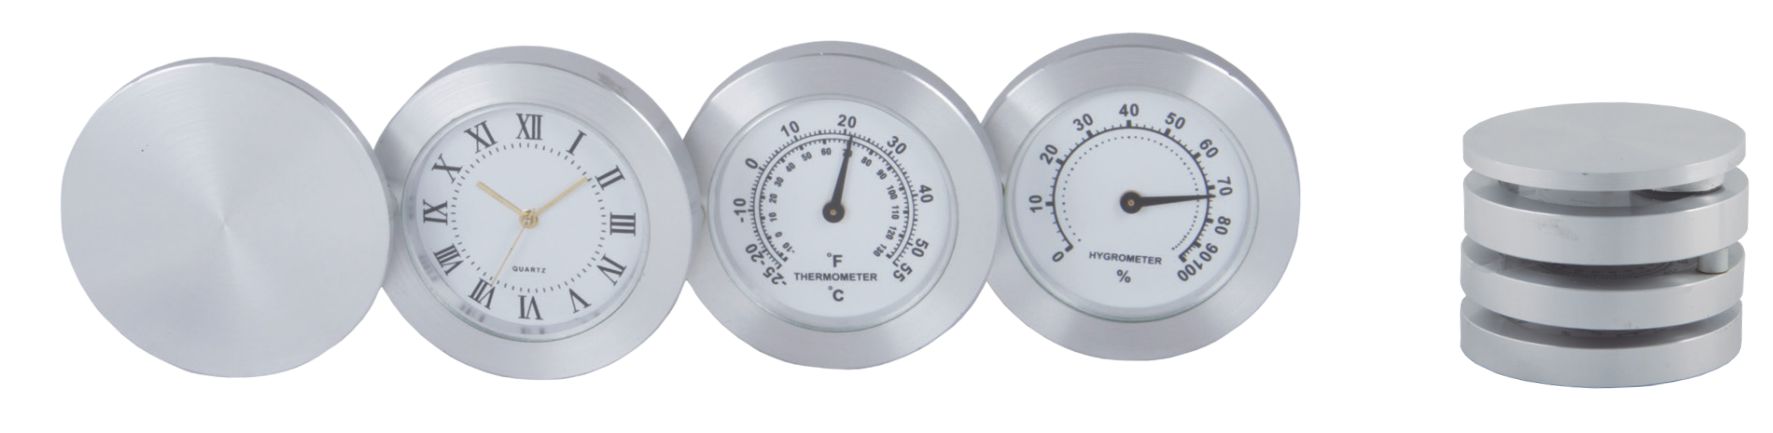 RL46, Reloj, termometro e hidrometro de aluminio